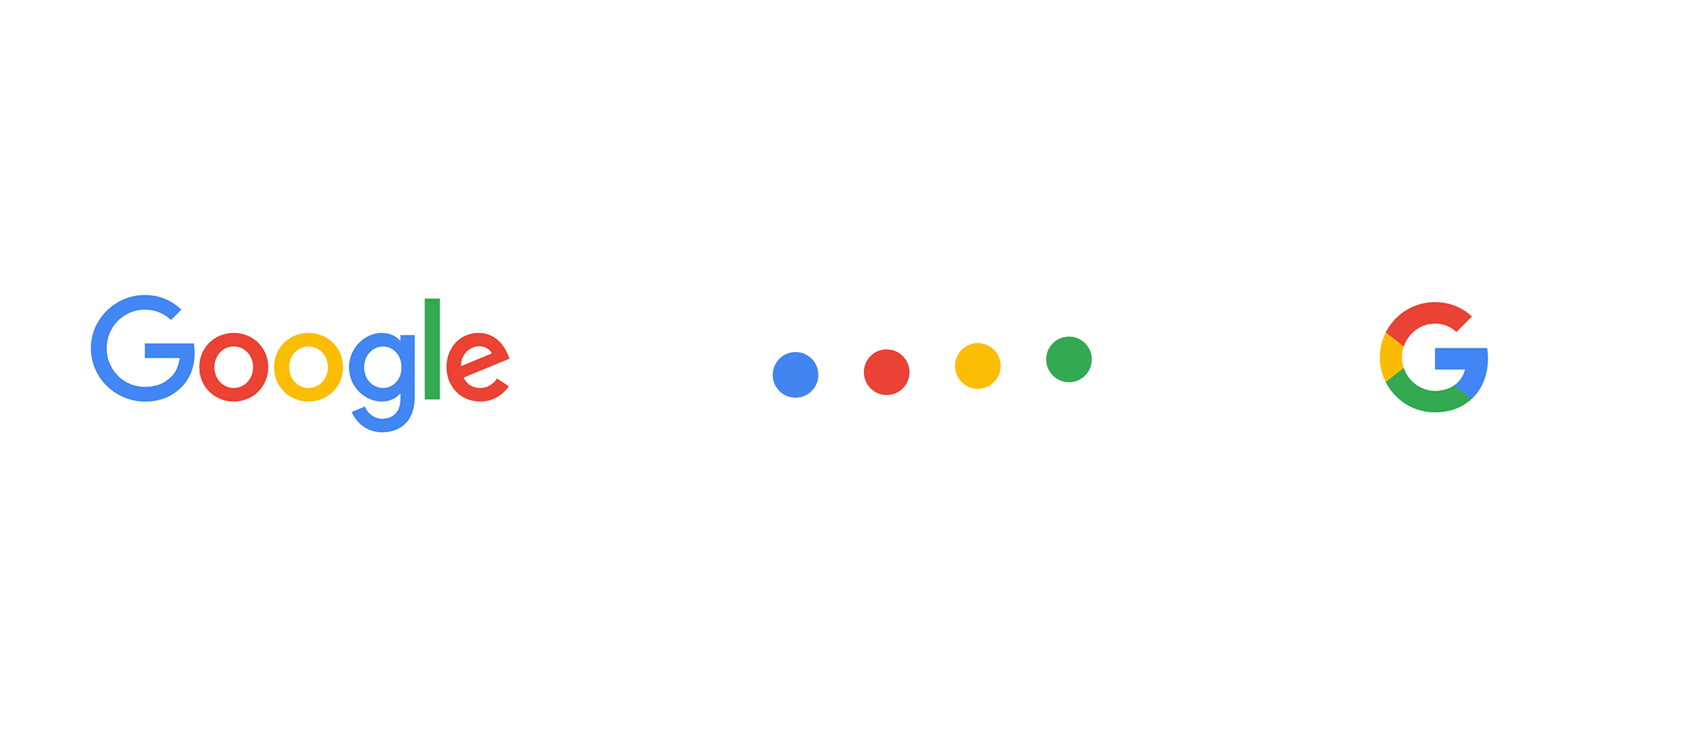 Find Us Google Logo - Evolving the Google Identity - Library - Google Design